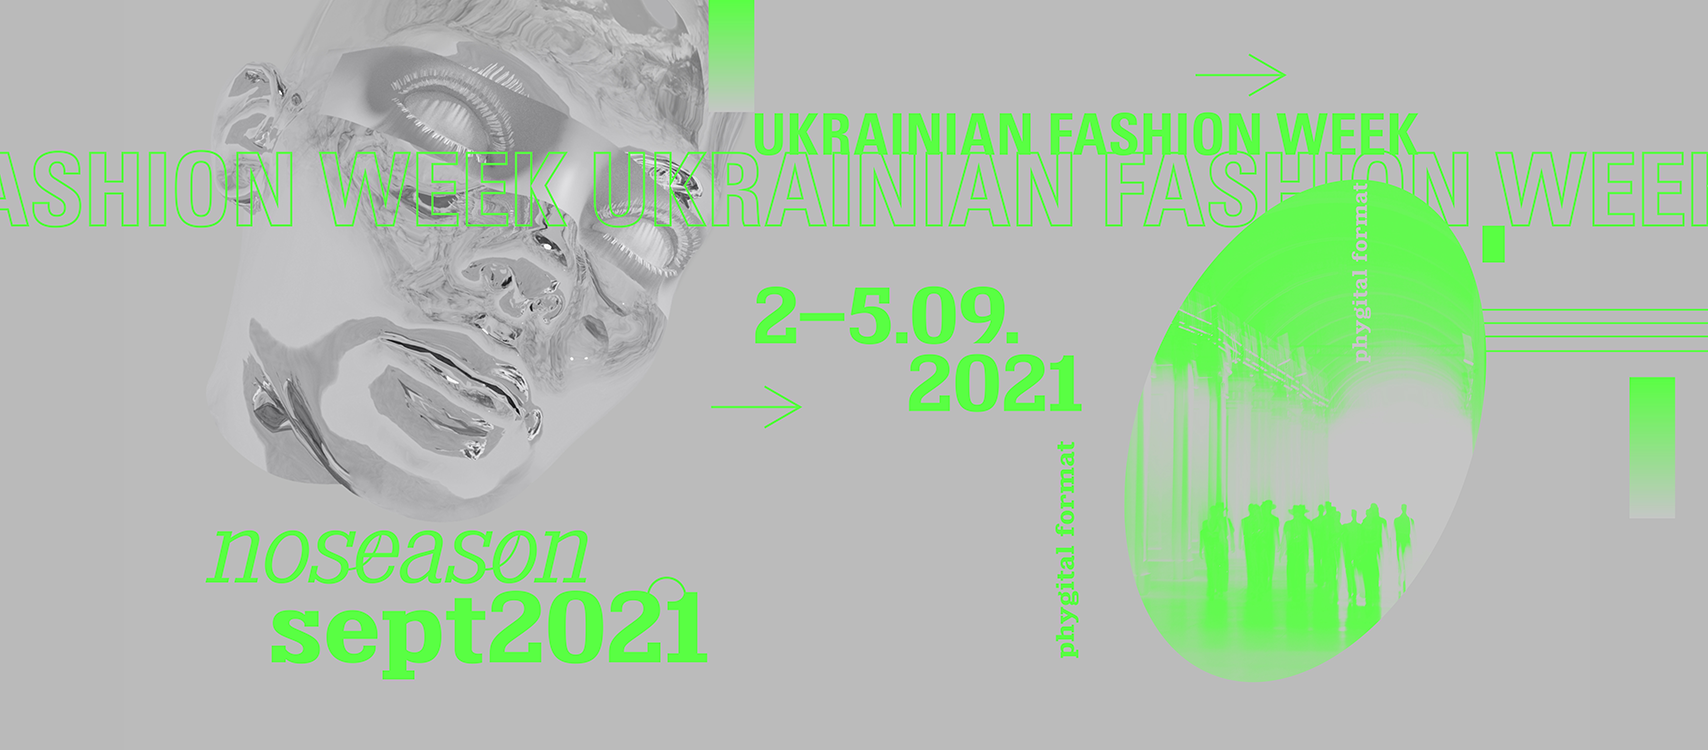 Accreditation for Ukrainian Fashion Week noseason sept 2021 has been opened